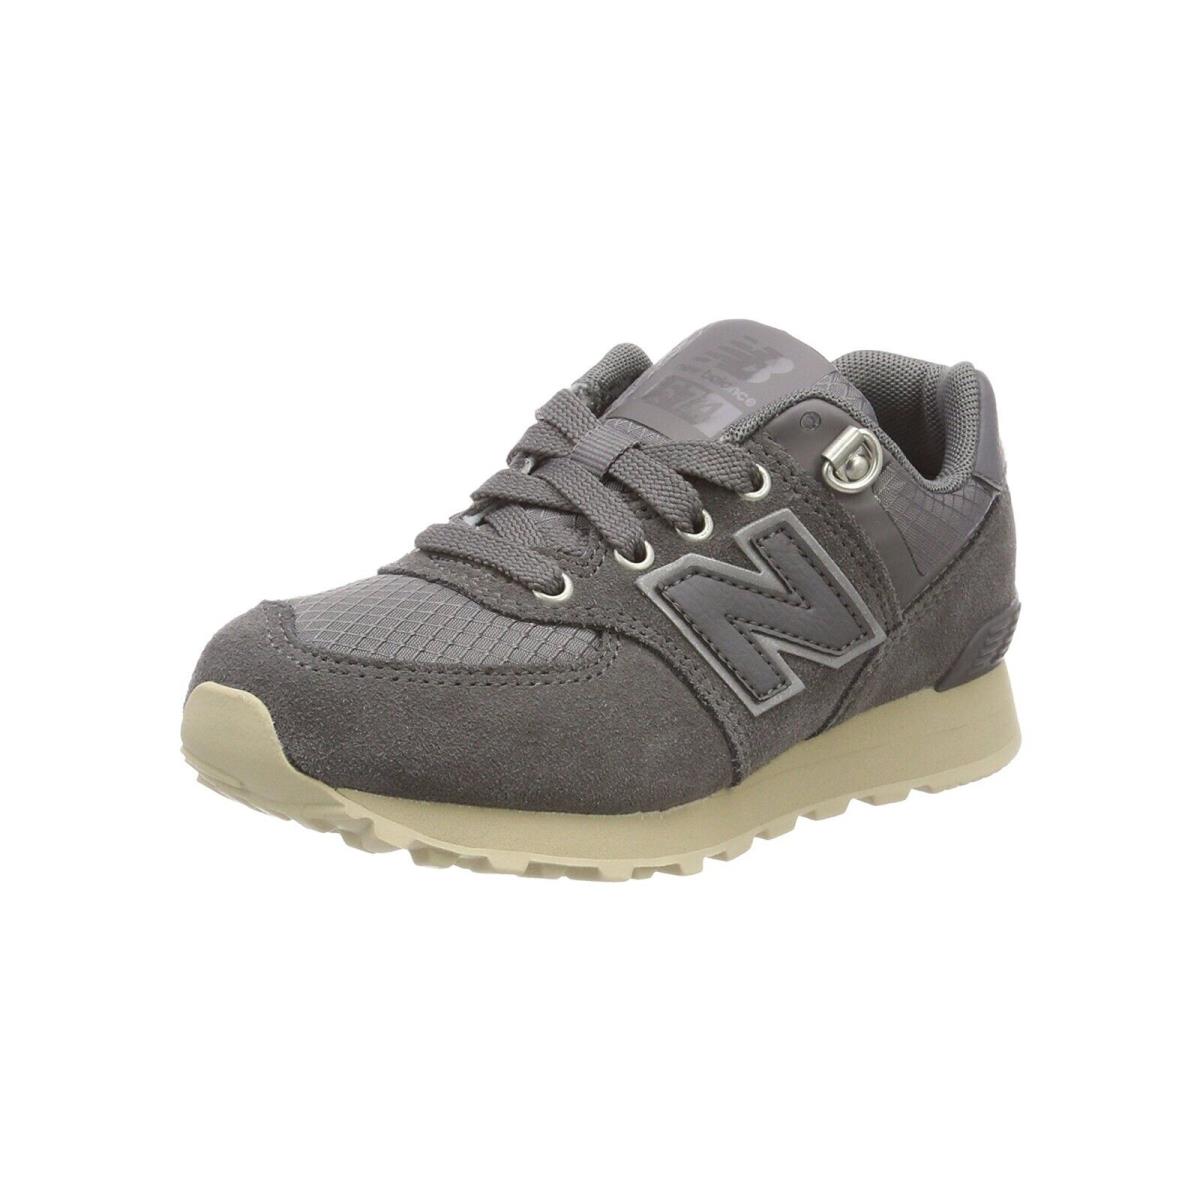 New Balance 574 Little Kids Running Shoes Sneakers KL574VEP - Grey/tan